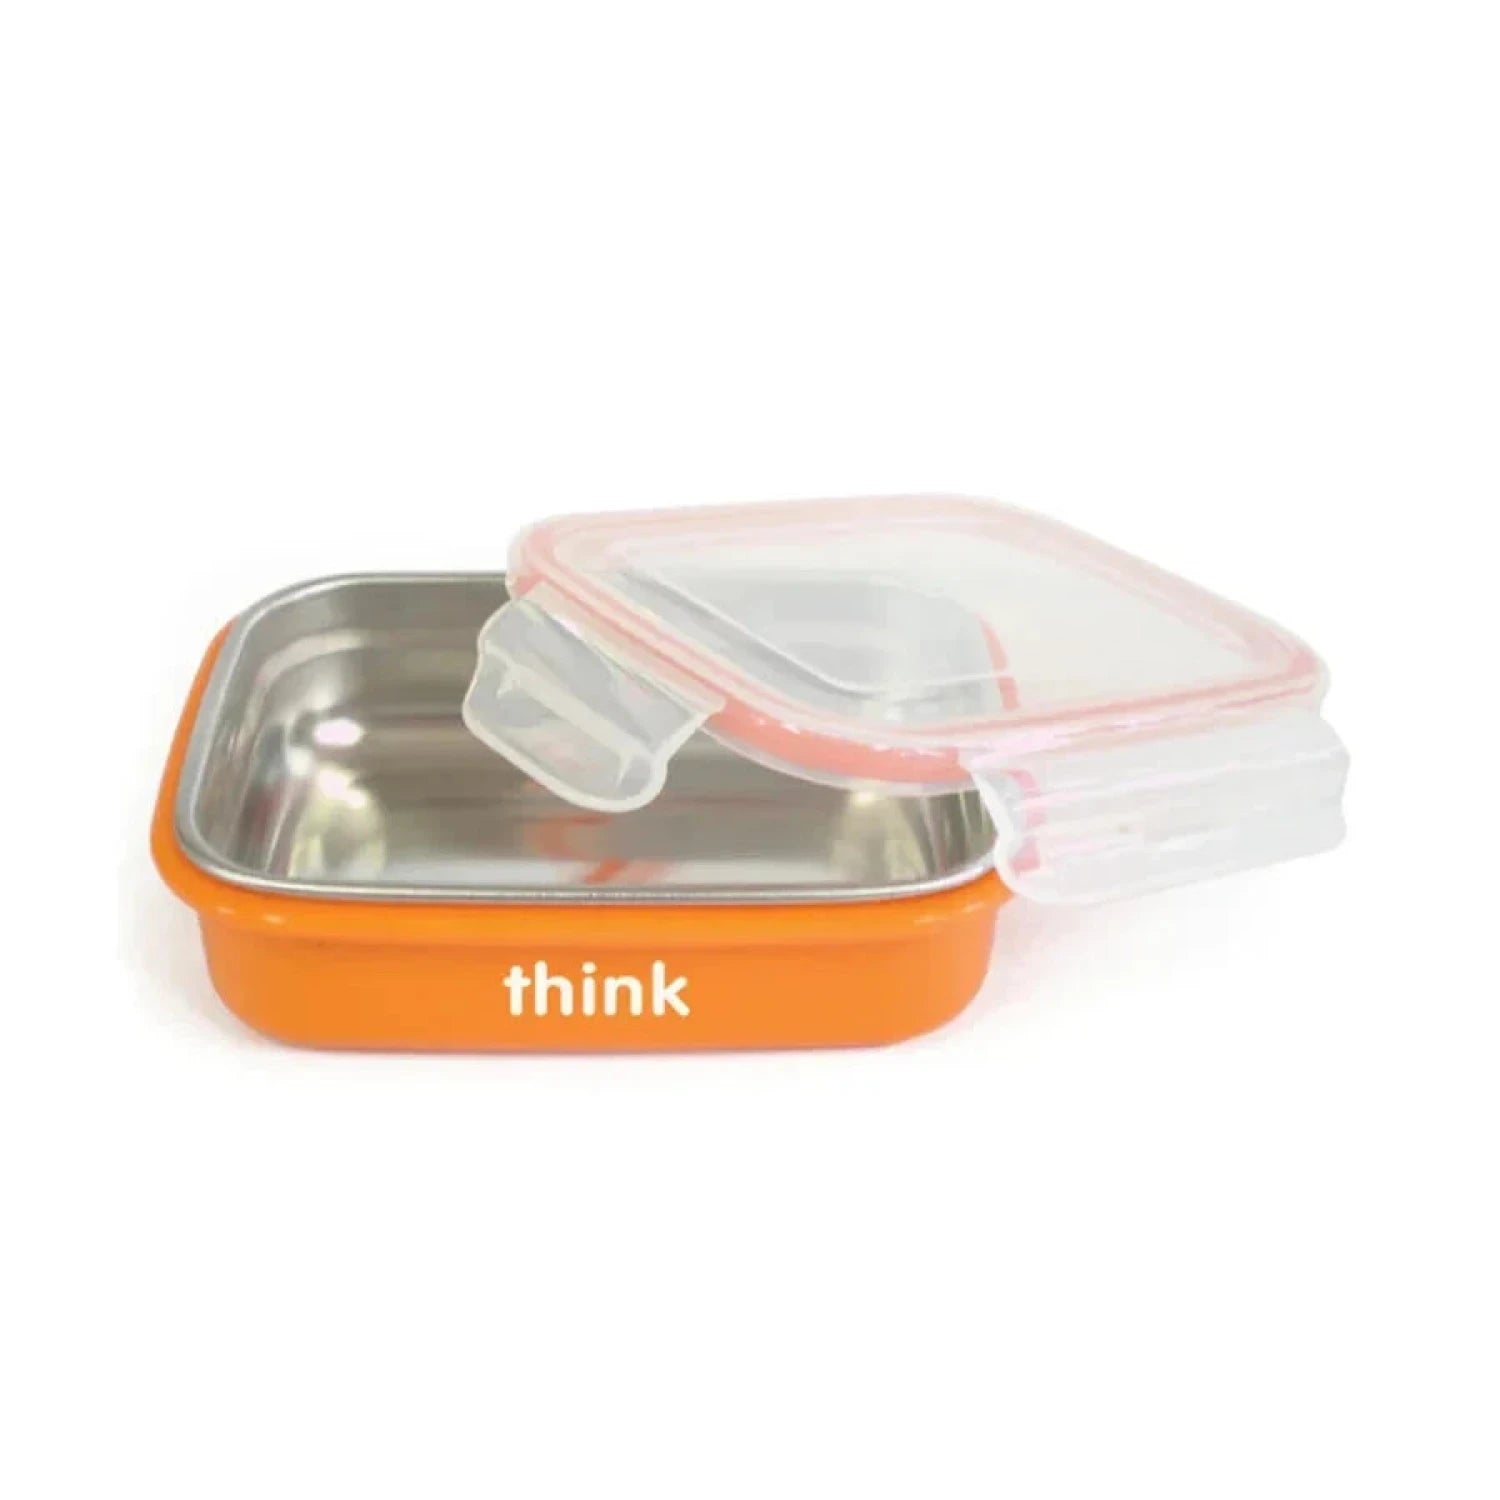 Thinksport BPA Free Bento Box shown in the color orange.